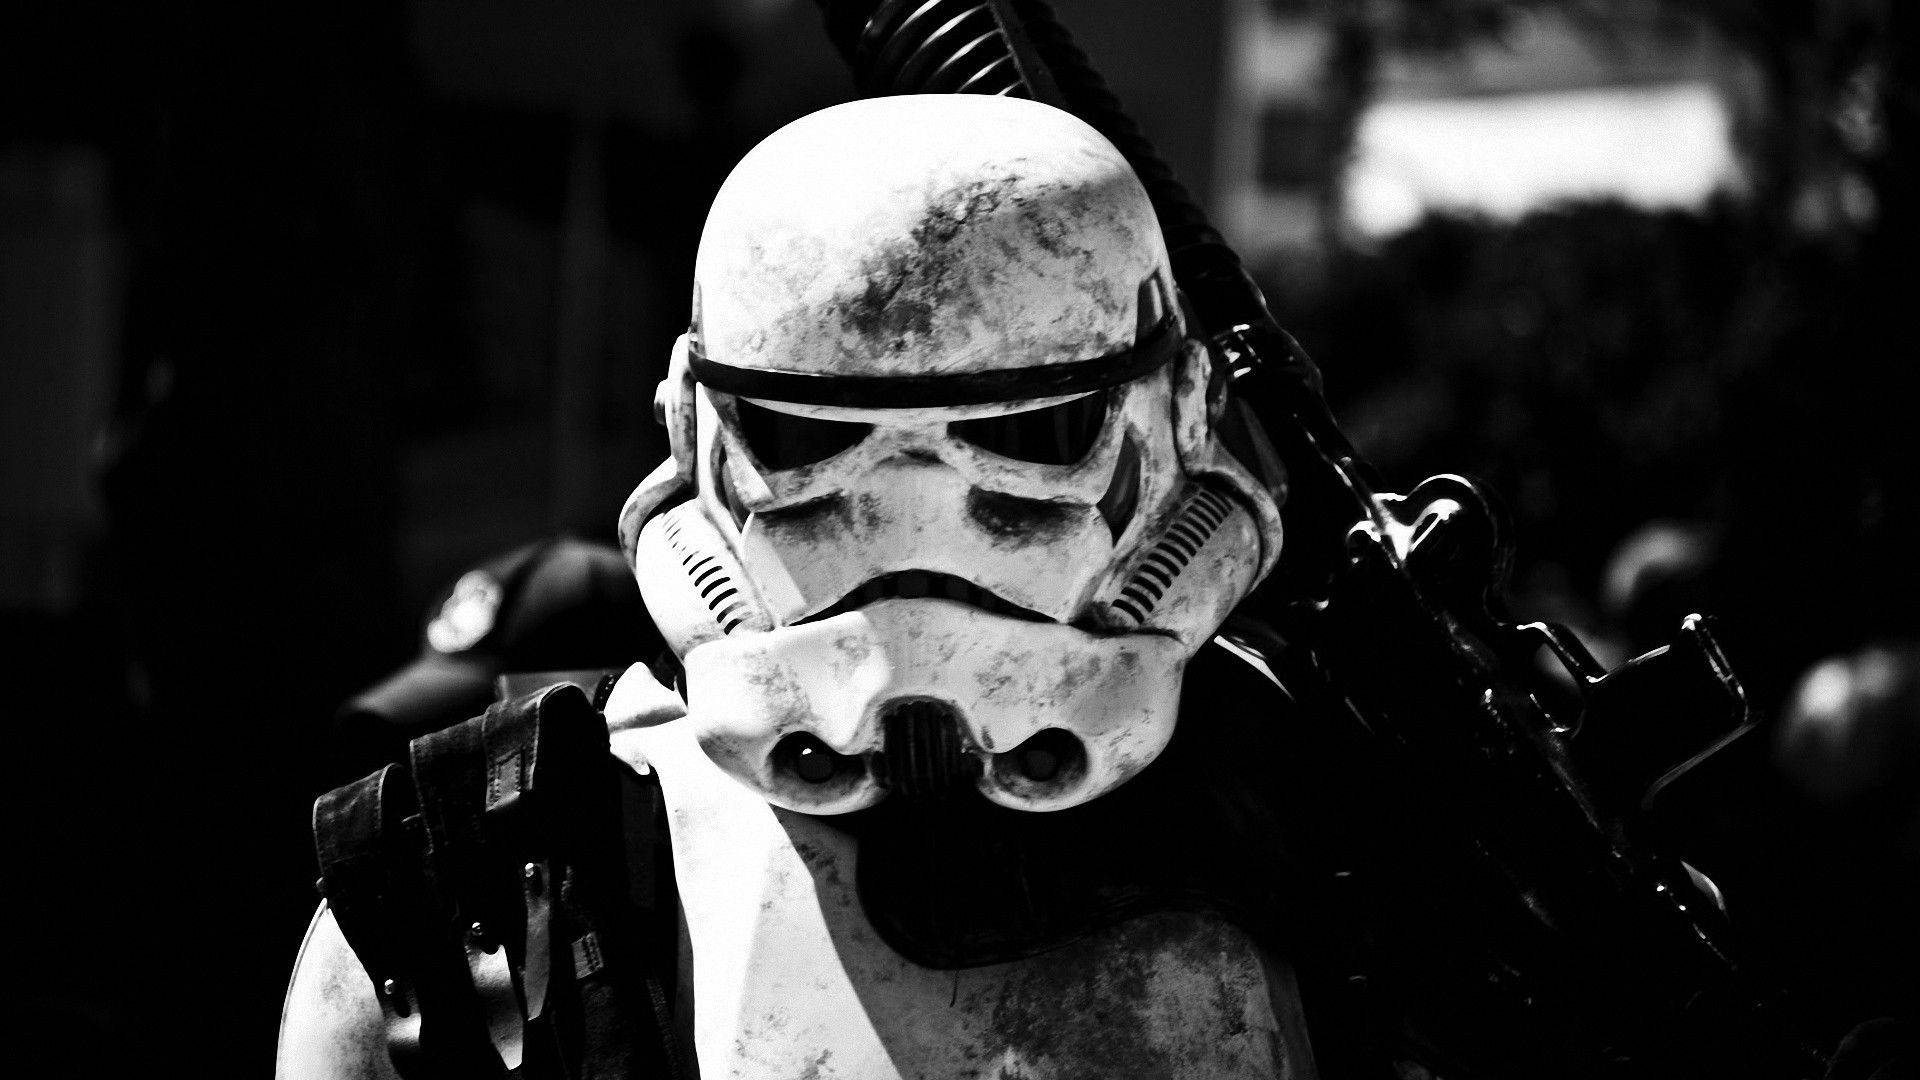 Stormtrooper stands ready Wallpaper